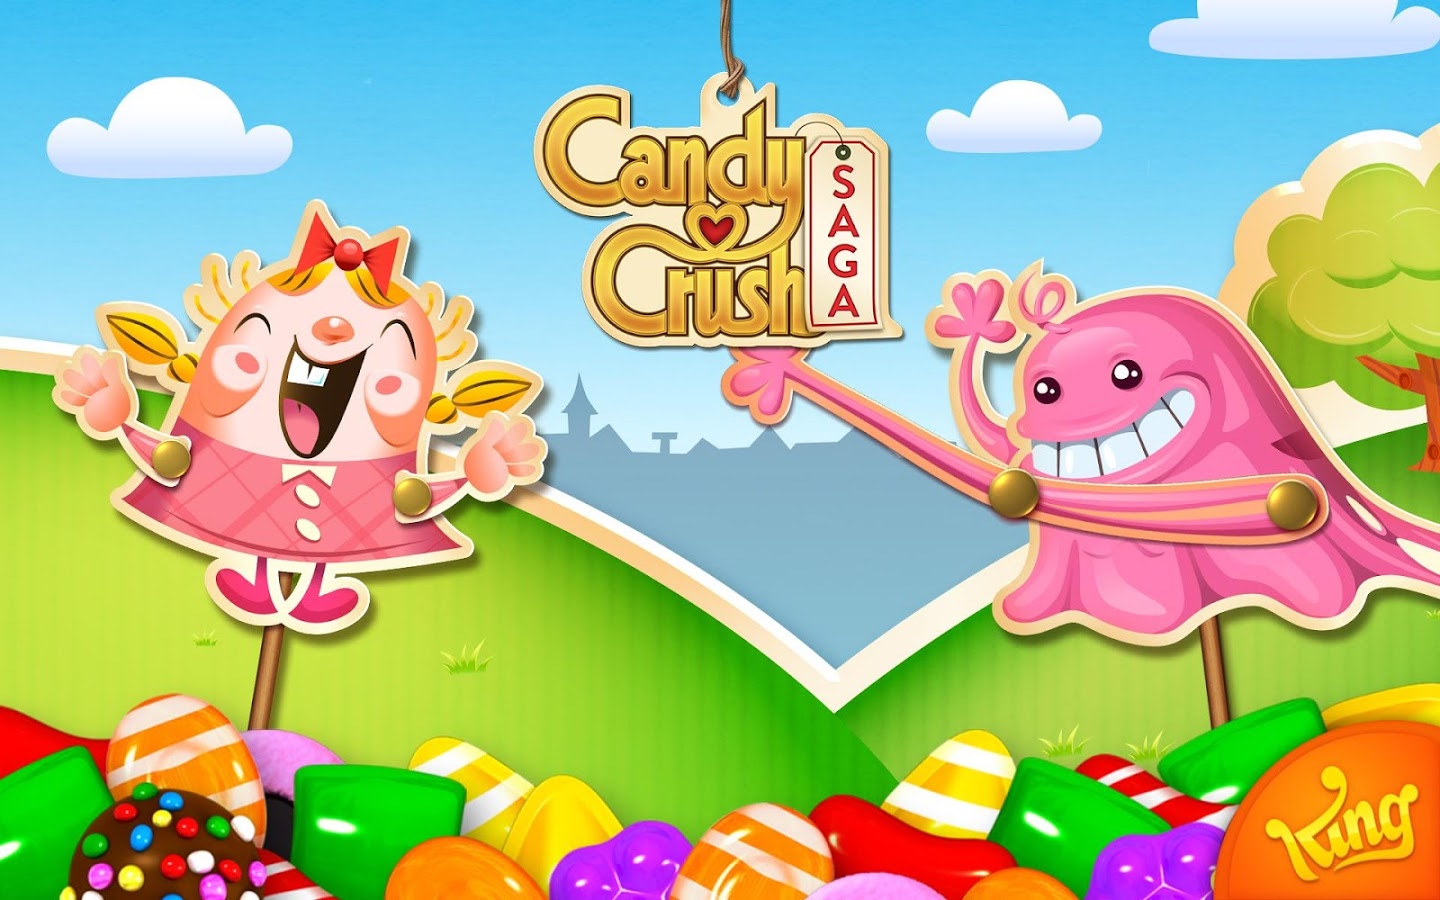 1. "Candy Crush Saga Nail Art Tutorial" - wide 2